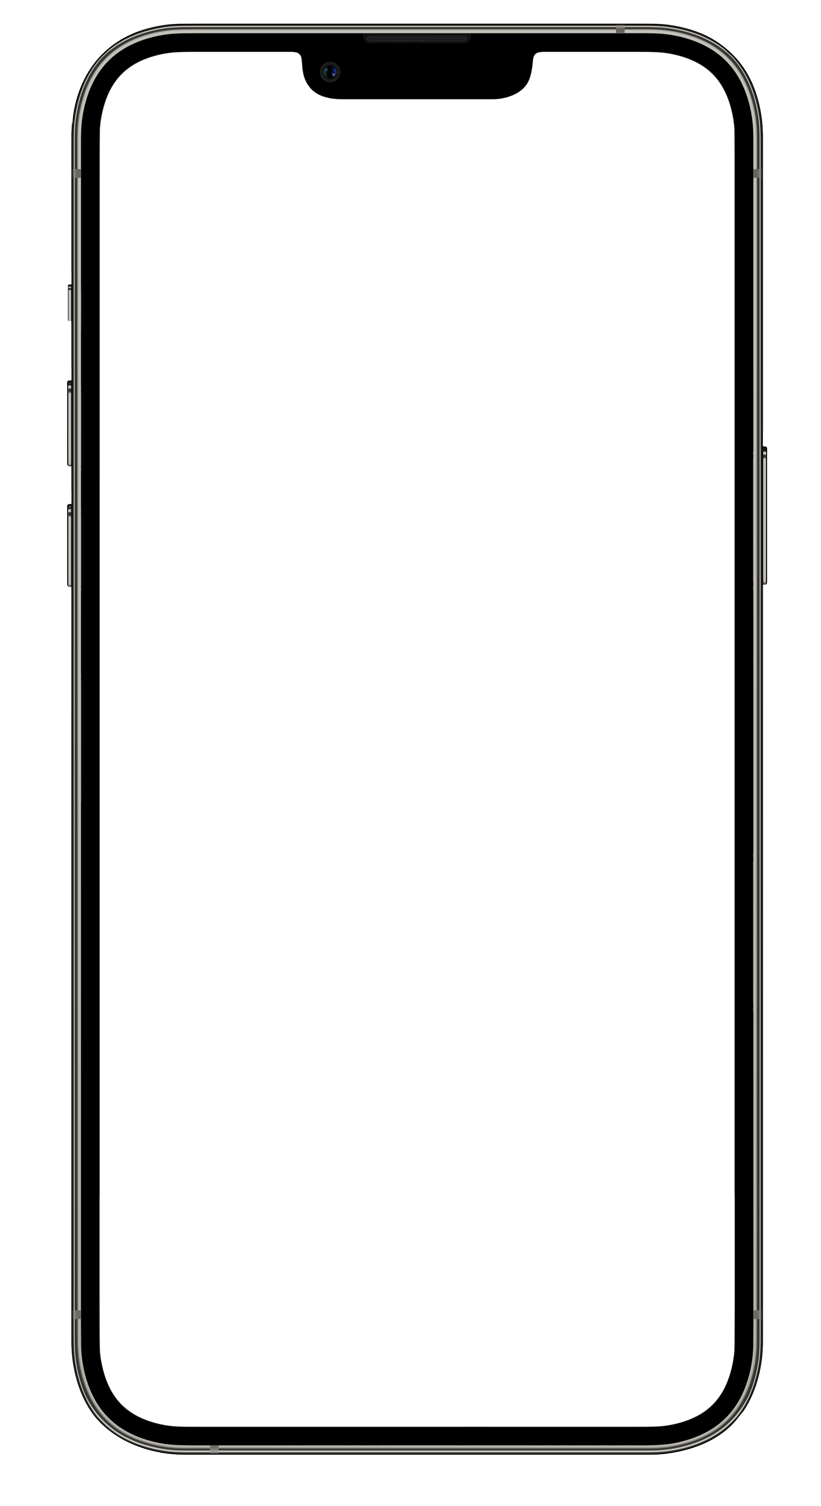 iphone screen image